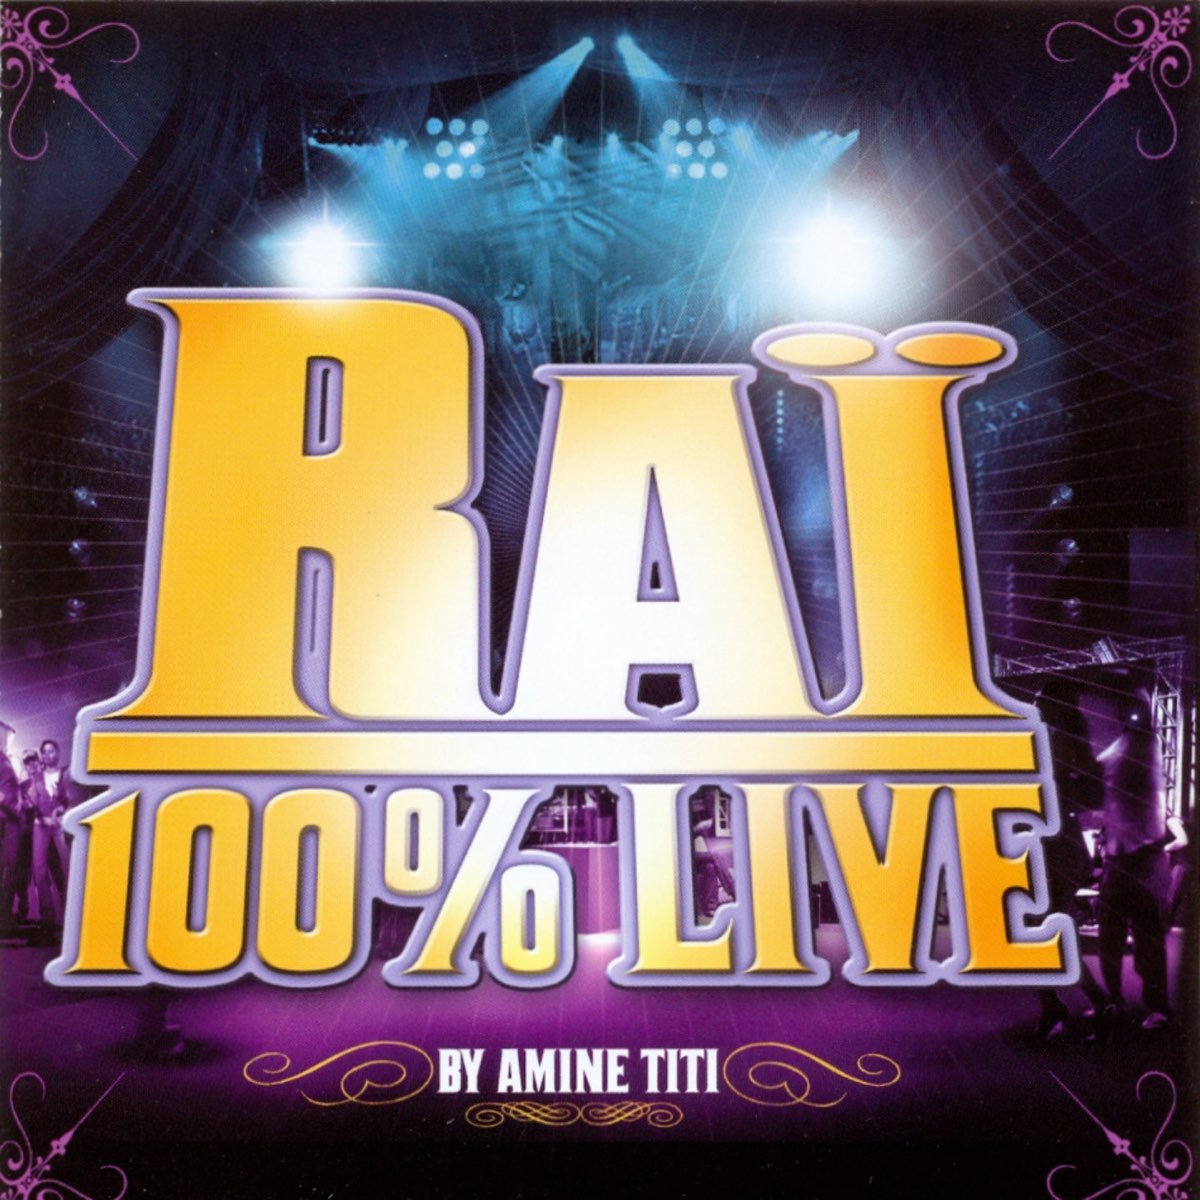 Raï 100% Live - Album par Amine Titi - Apple Music